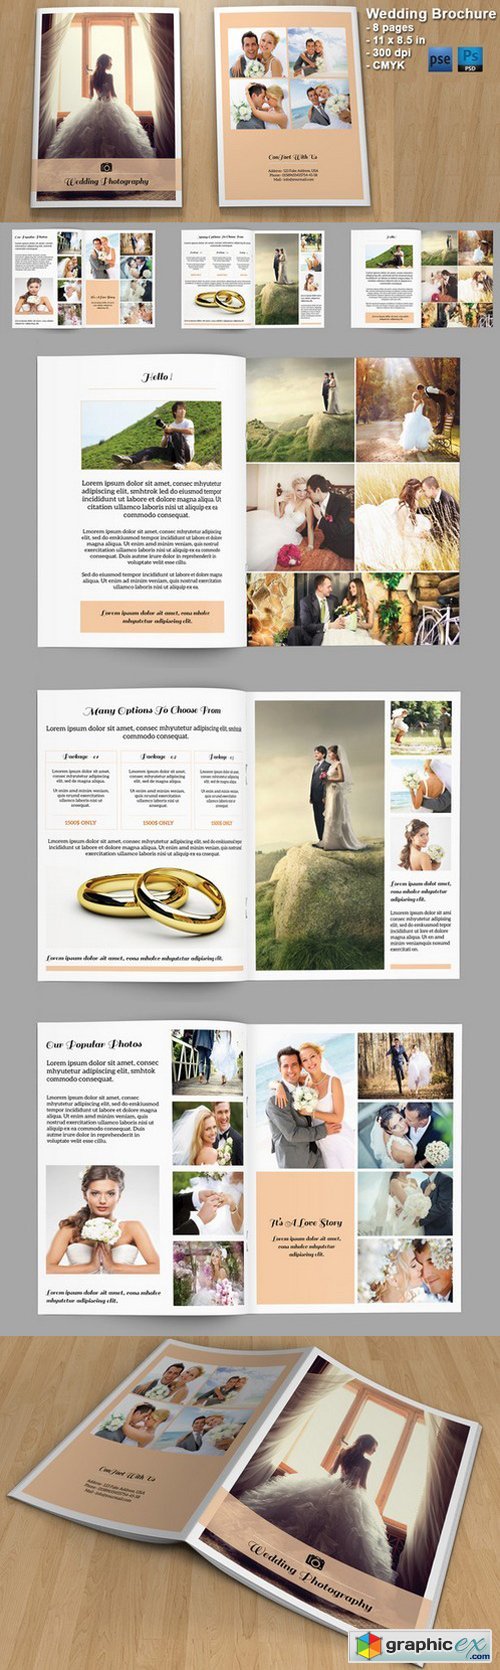 Wedding Photography Brochure - V328